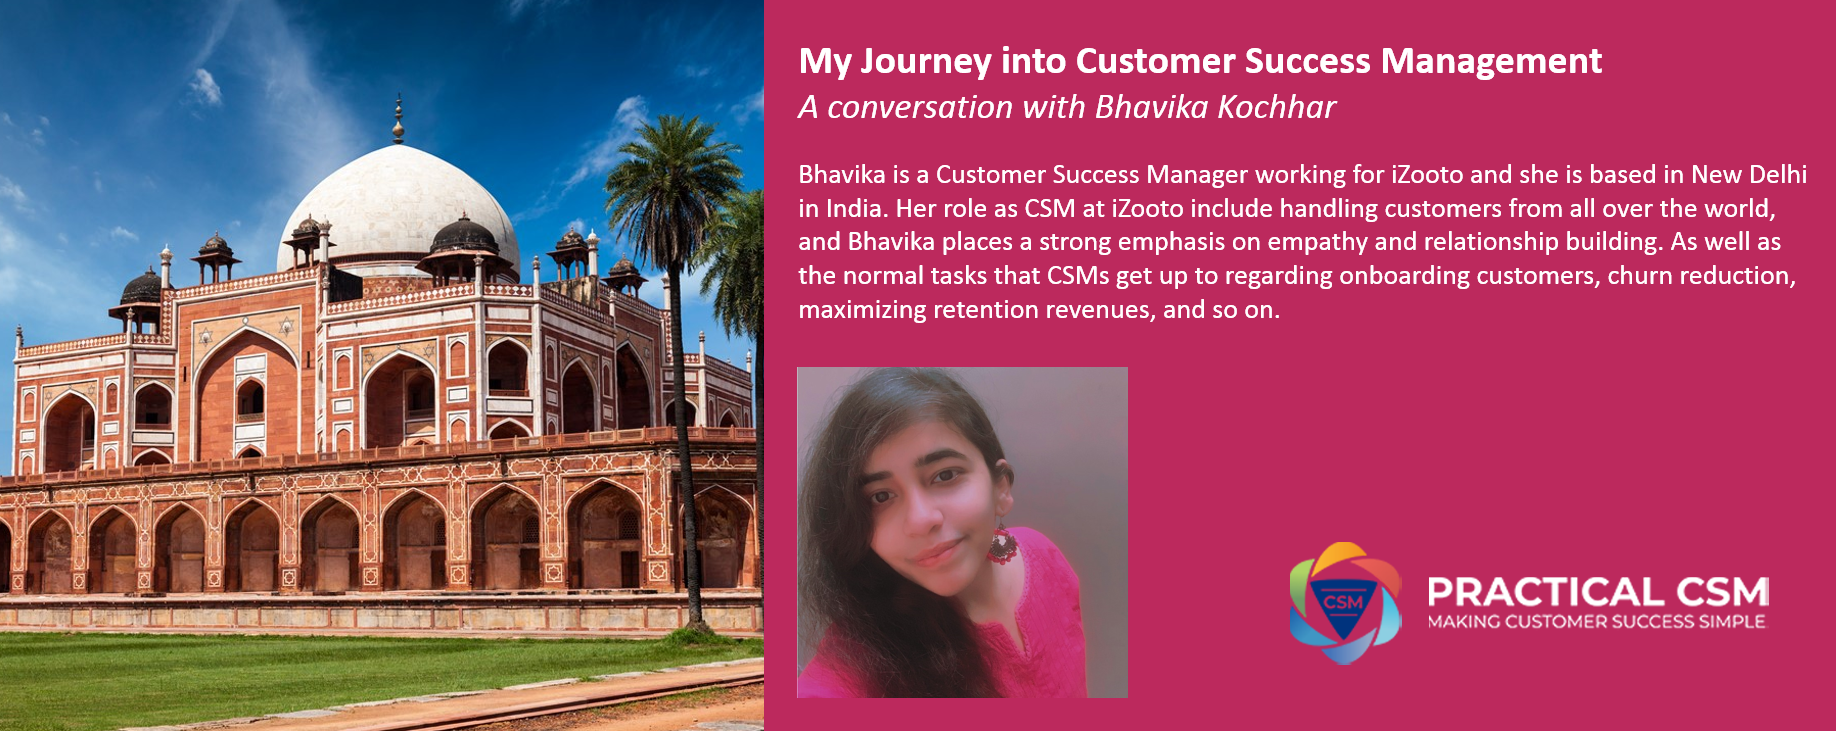 My Journey Into Customer Success Management - Bhavika Kochhar - Practical CSM